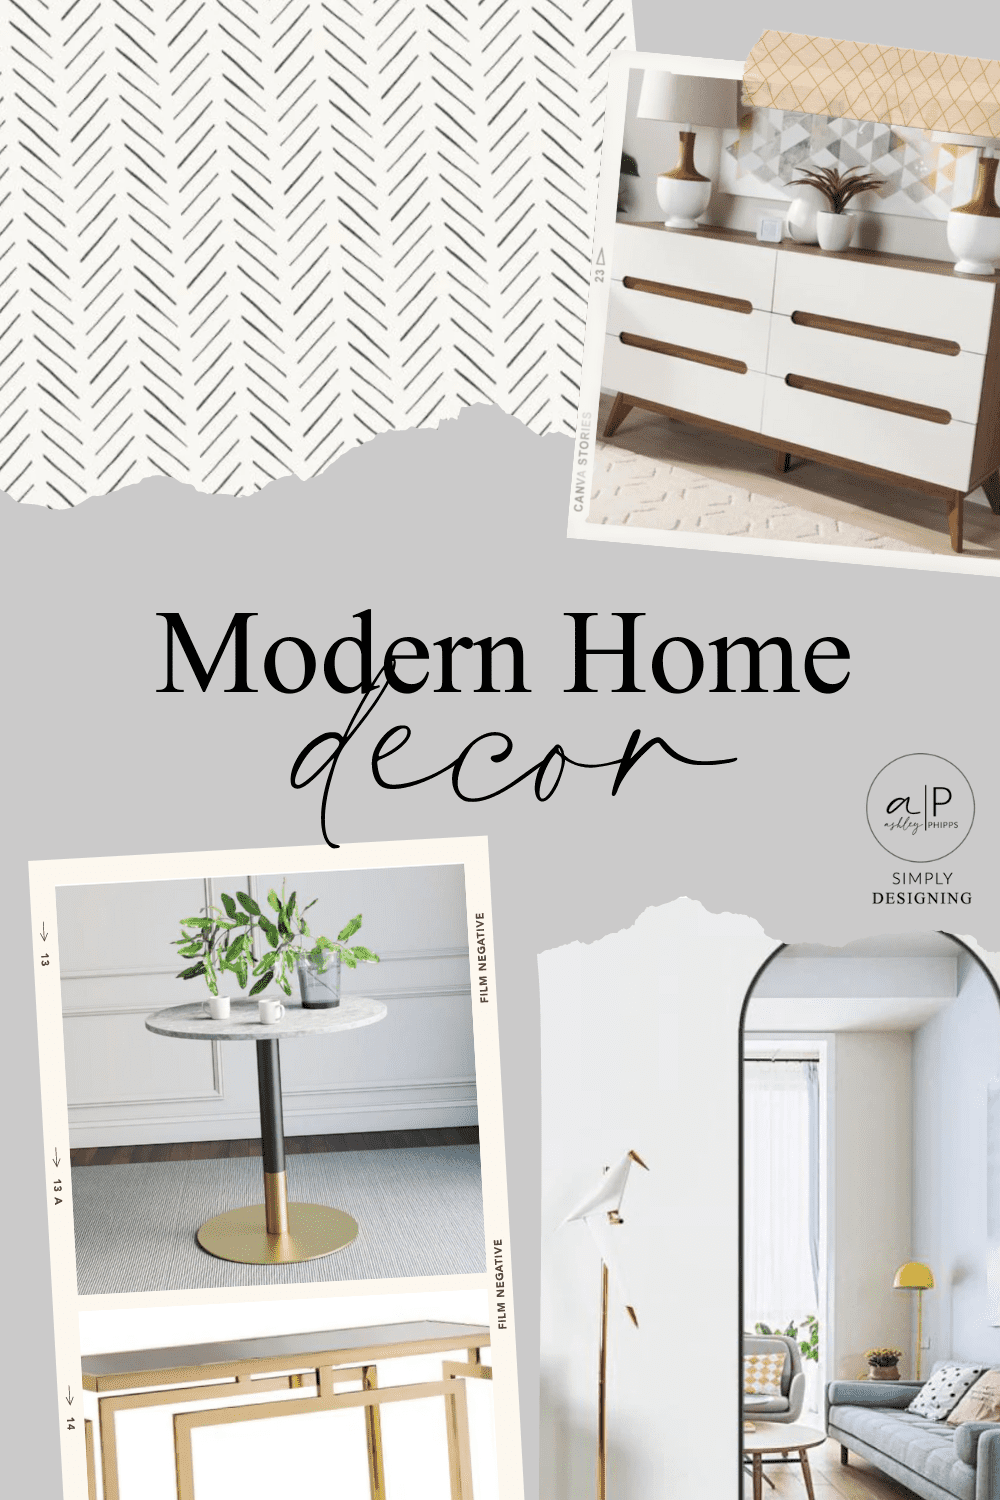 Modern Home Decor The Home Depot 16 Budget-Friendly Modern Home Decor Ideas 5 organize a closet